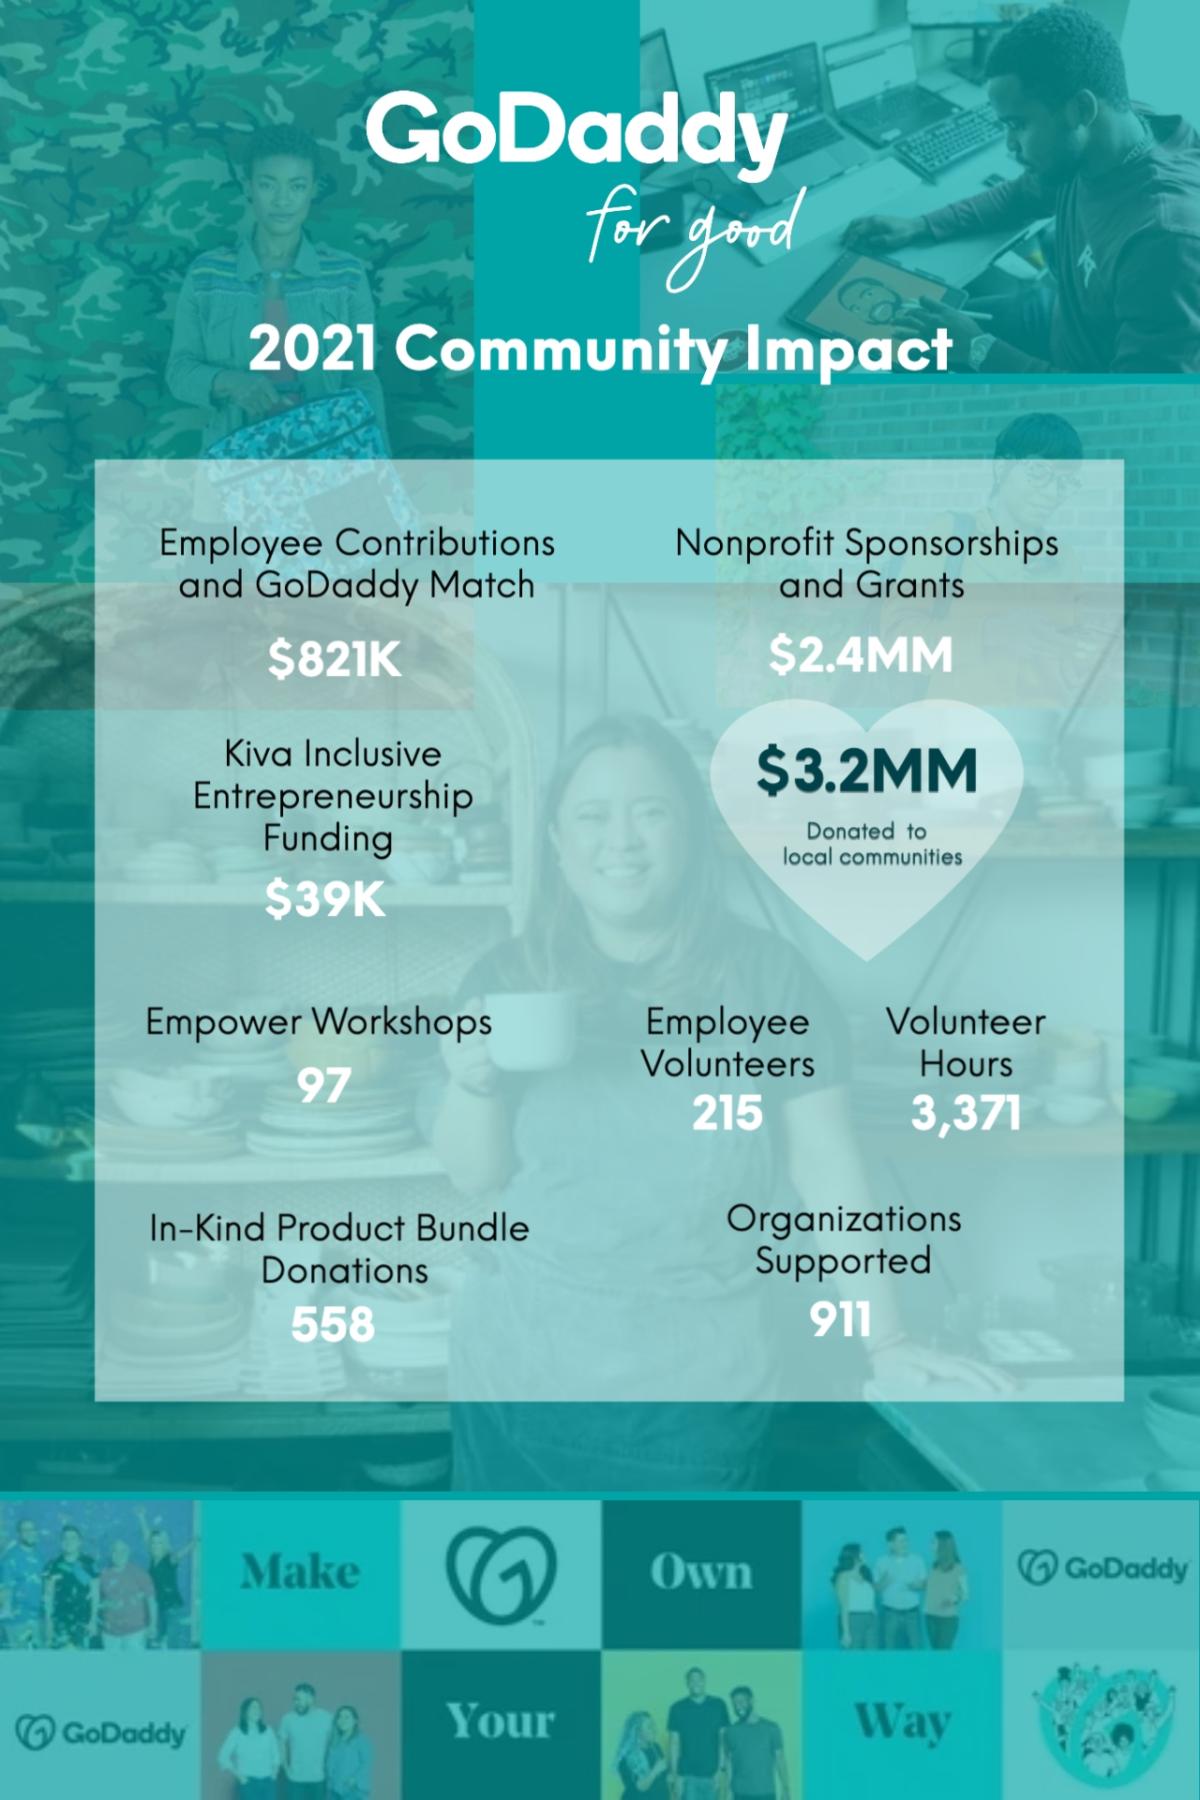 GoDaddy infographic showing 2021 community impact